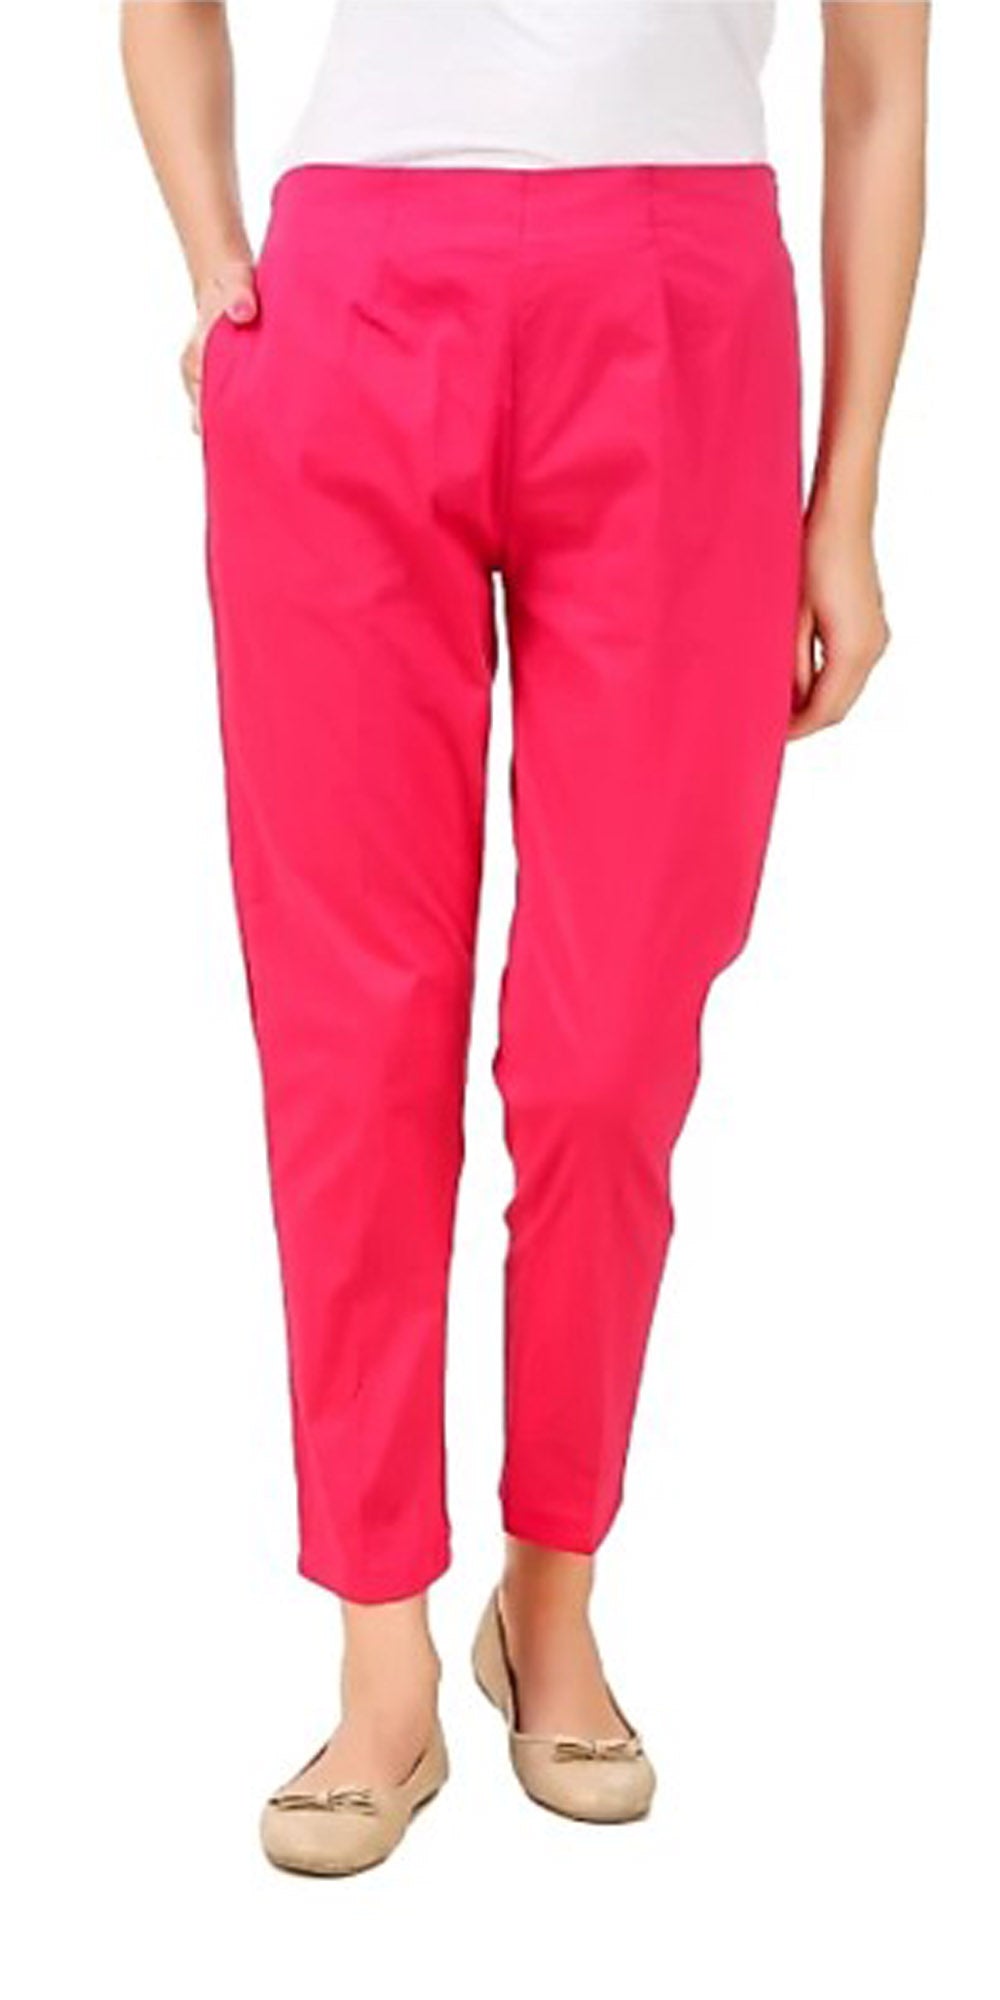 Lululemon Pants size10/Reg Active Wear Silky Lycra Fabric Geometric Multi  Color | eBay